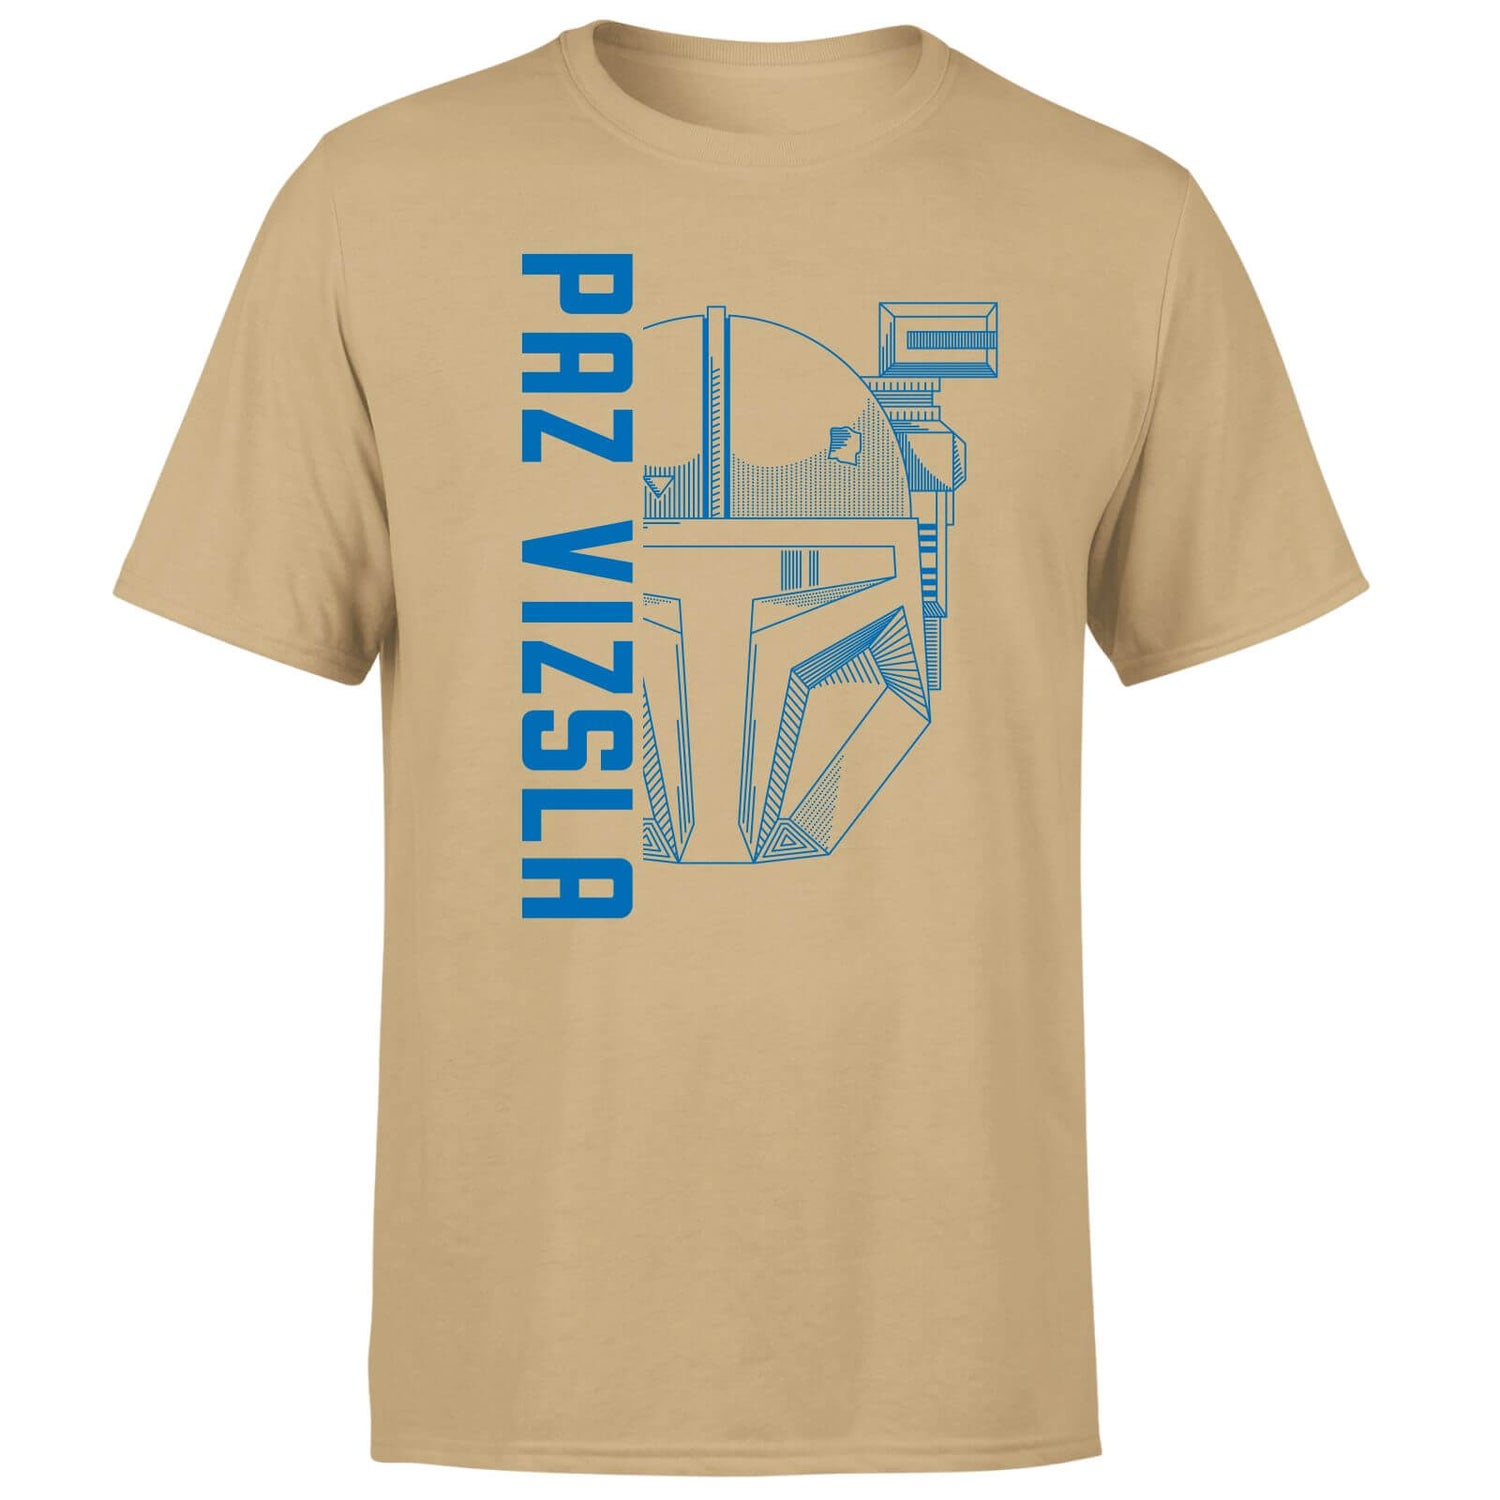 Star Wars The Mandalorian Paz Vizsla Men's T-Shirt - Tan